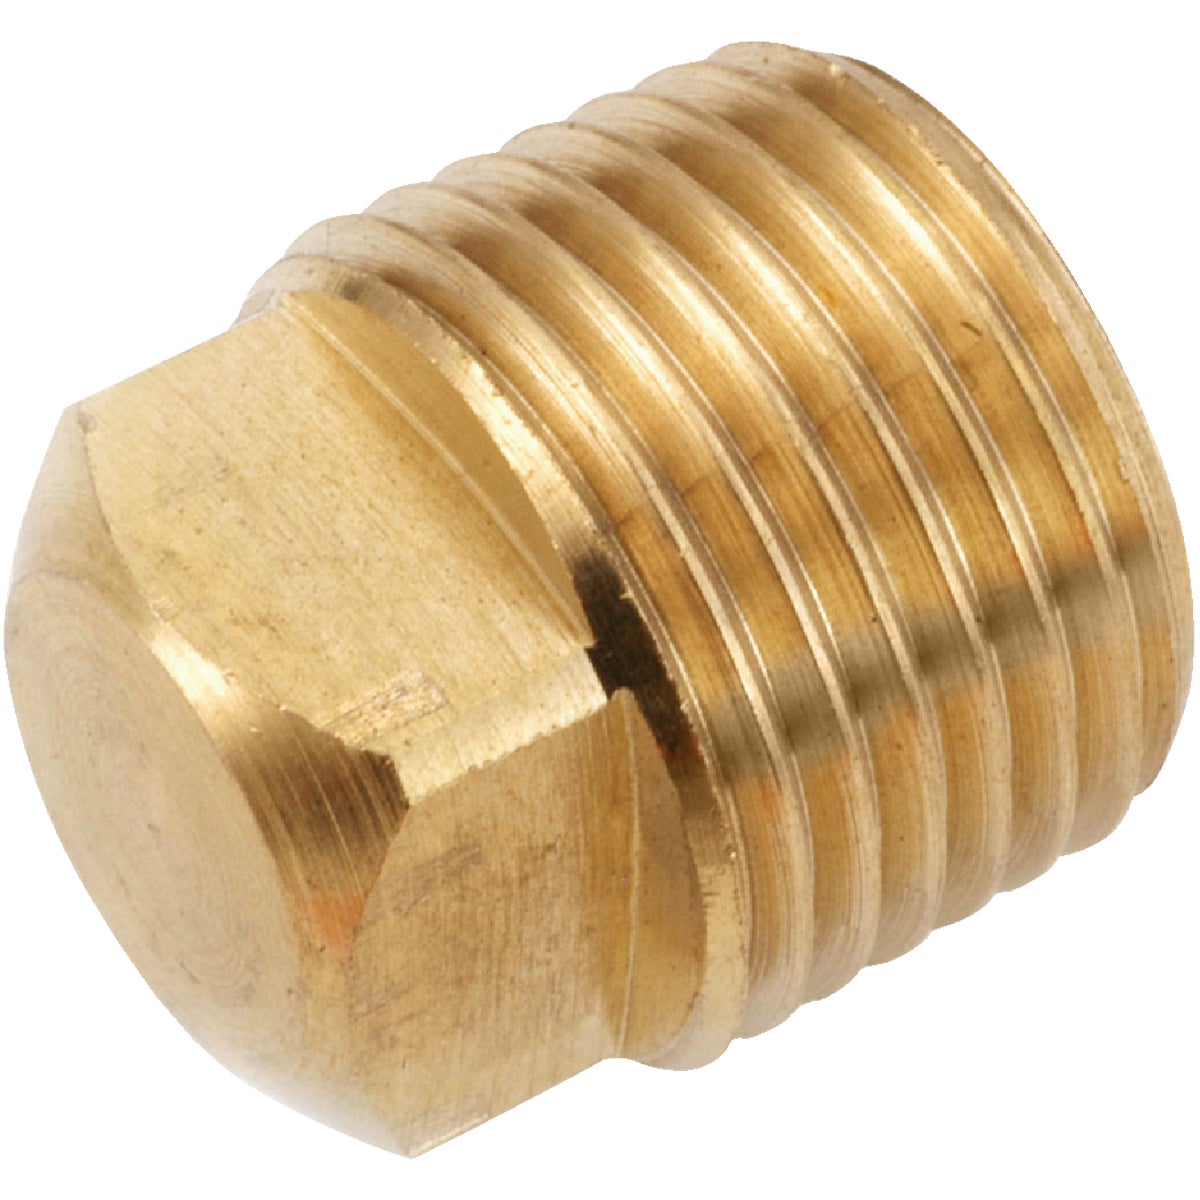 Item 400201, M.I.P. (Male iron pipe) thread yellow brass square head pipe plug.